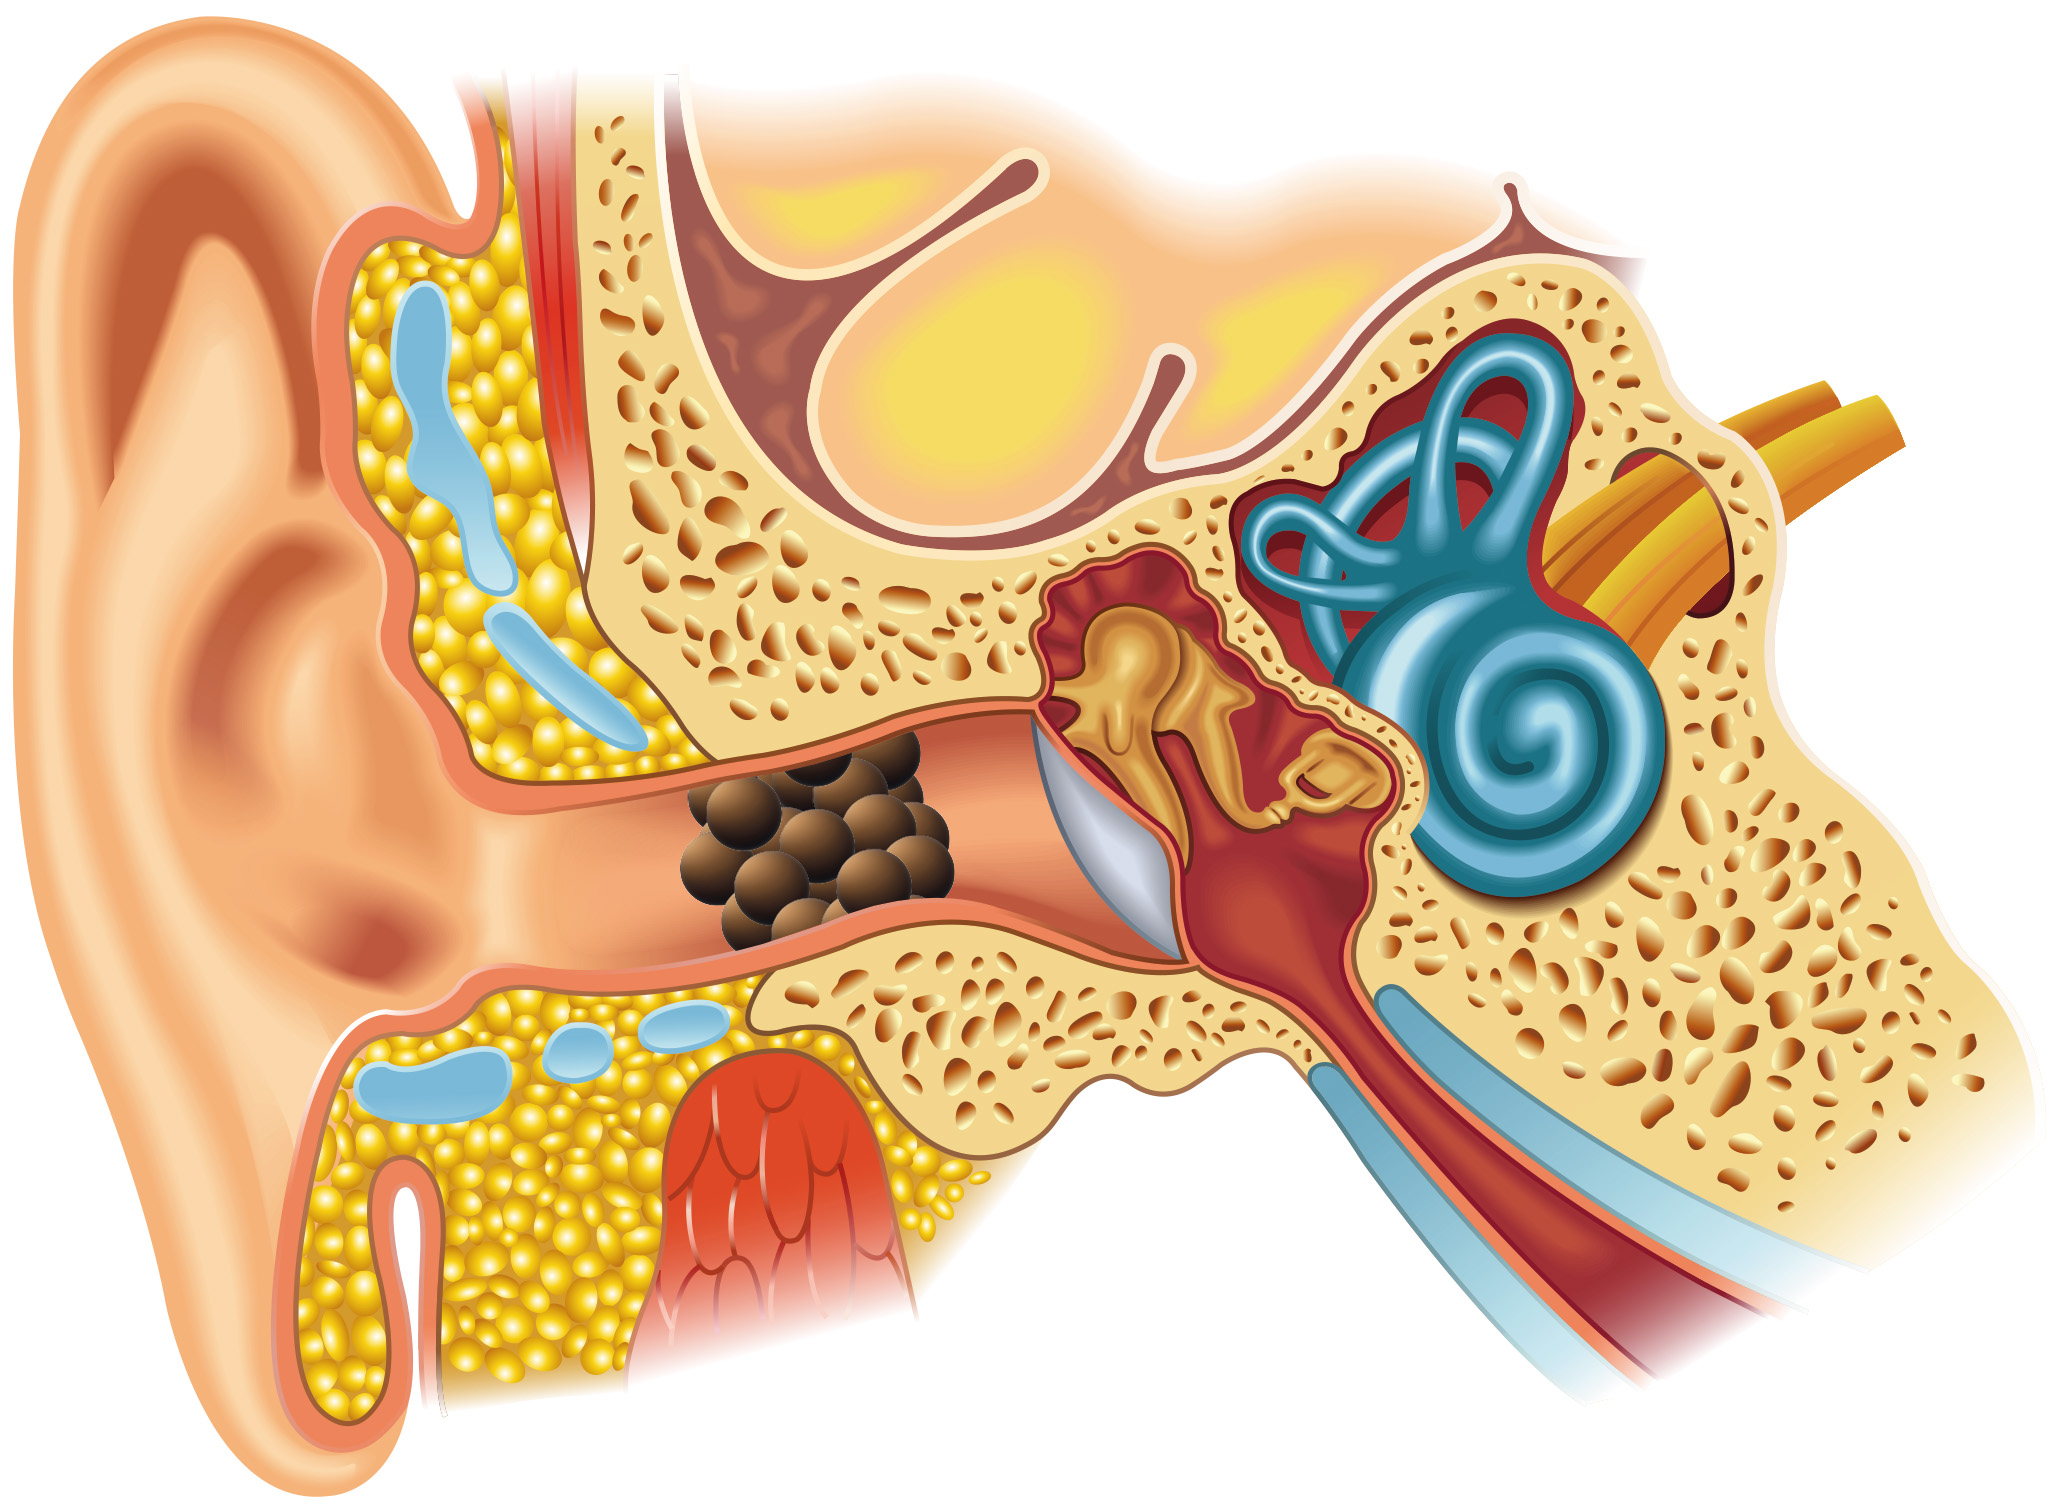 Cérumen : anatomie, bouchon d'oreille, traitements